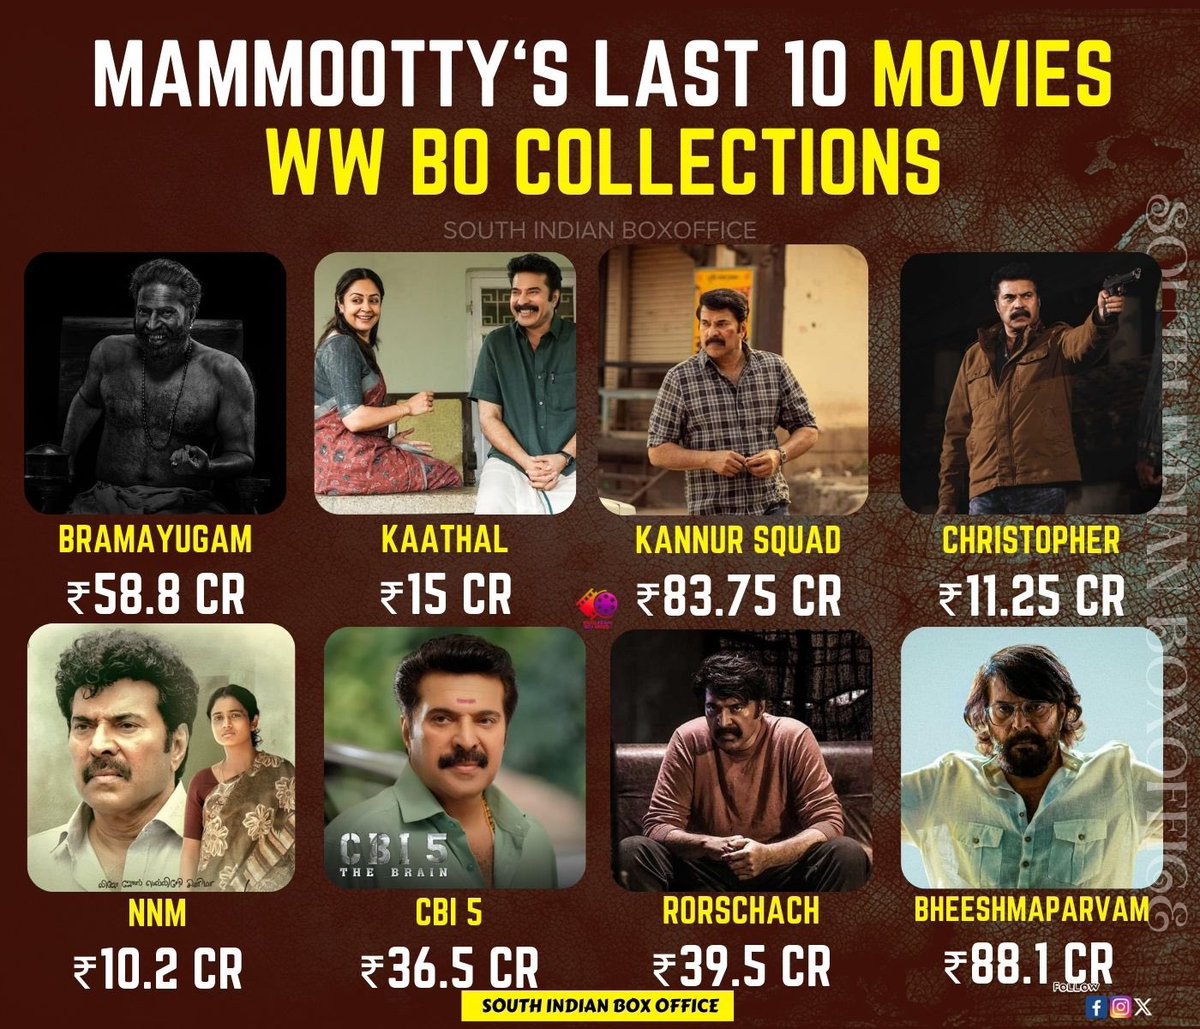 Mammookka’s  Last 10 Movies WW BO Collections ;

🔹#Bramayugam - ₹58.8 Cr
🔹#Kaathalthecore - ₹15 Cr
🔹#KannurSquad -  ₹83.65 Cr
🔹#Christopher - ₹11.25 Cr
🔹#NanpakalNerathuMayakkam - ₹10.2 Cr
🔹#Rorschach - ₹39.5 Cr
🔹#CBI5TheBrain - ₹36.5 Cr
🔹#BheeshmaParvam - ₹88.1